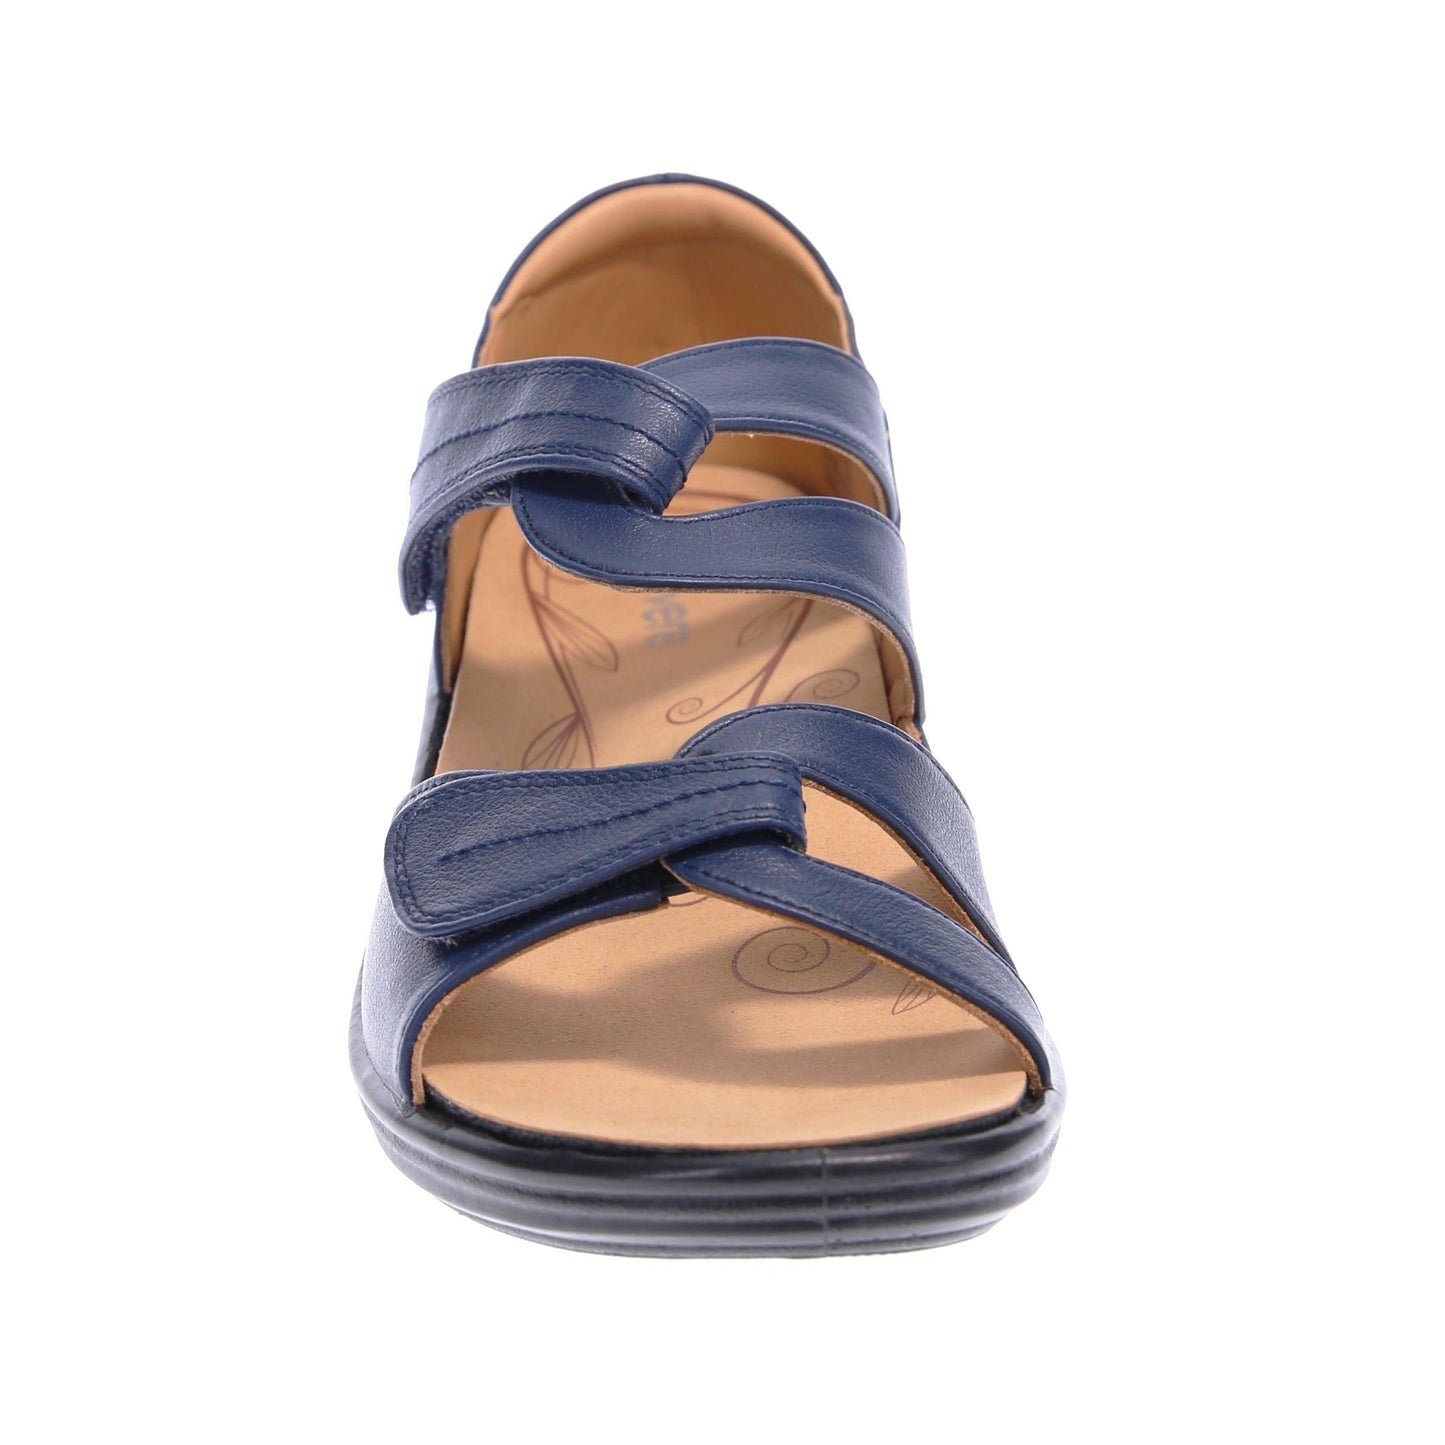 Revere Geneva orthotic sandals. Pewter - Anjelstore 